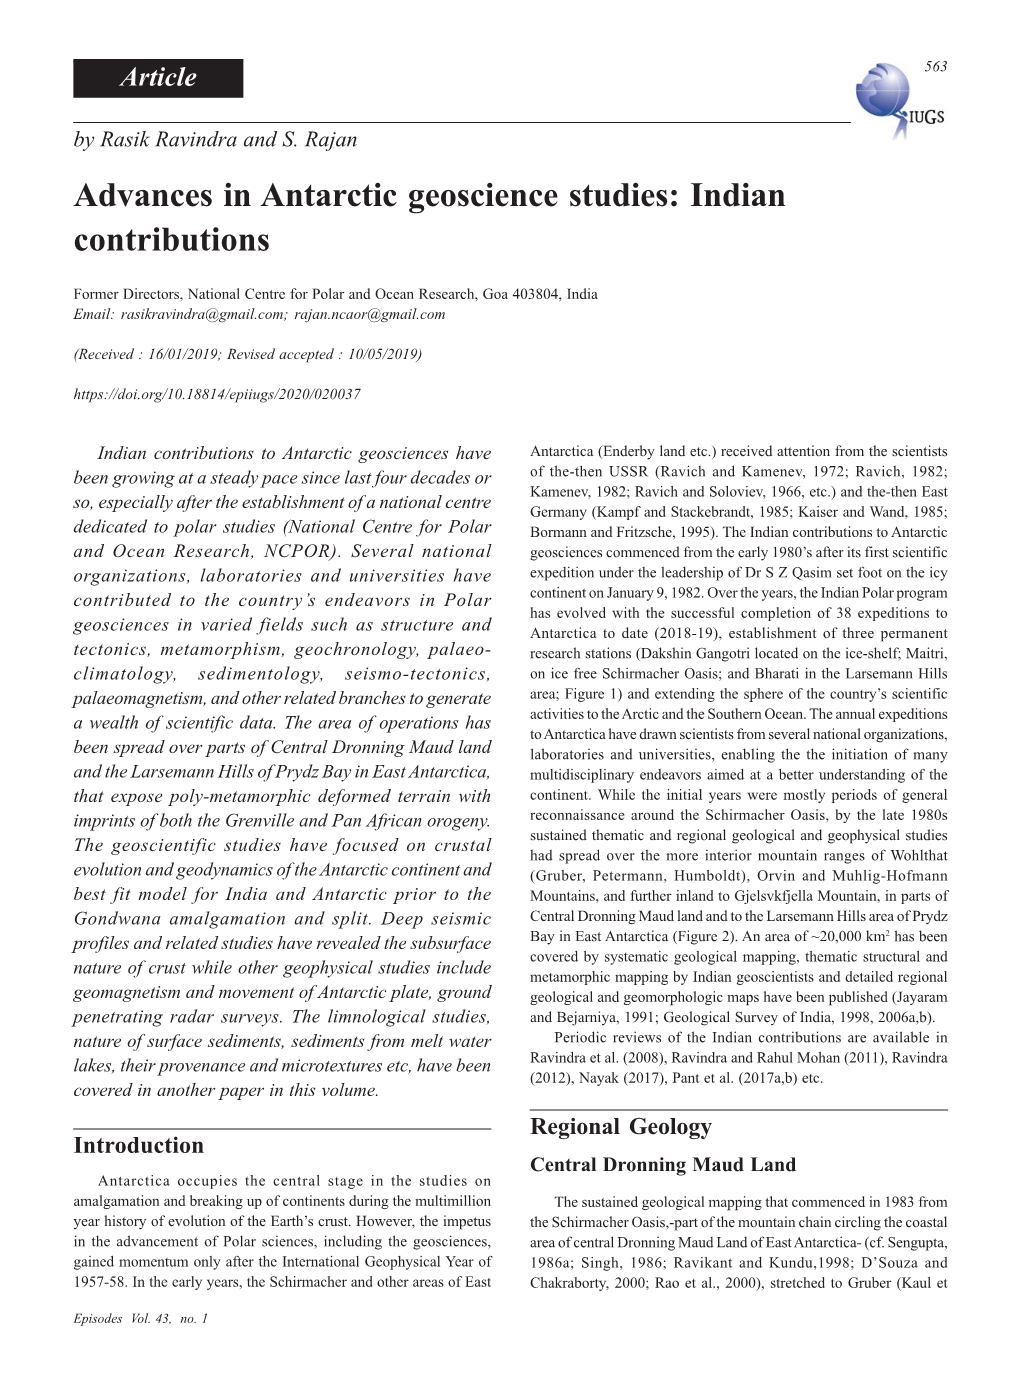 Advances in Antarctic Geoscience Studies: Indian Contributions